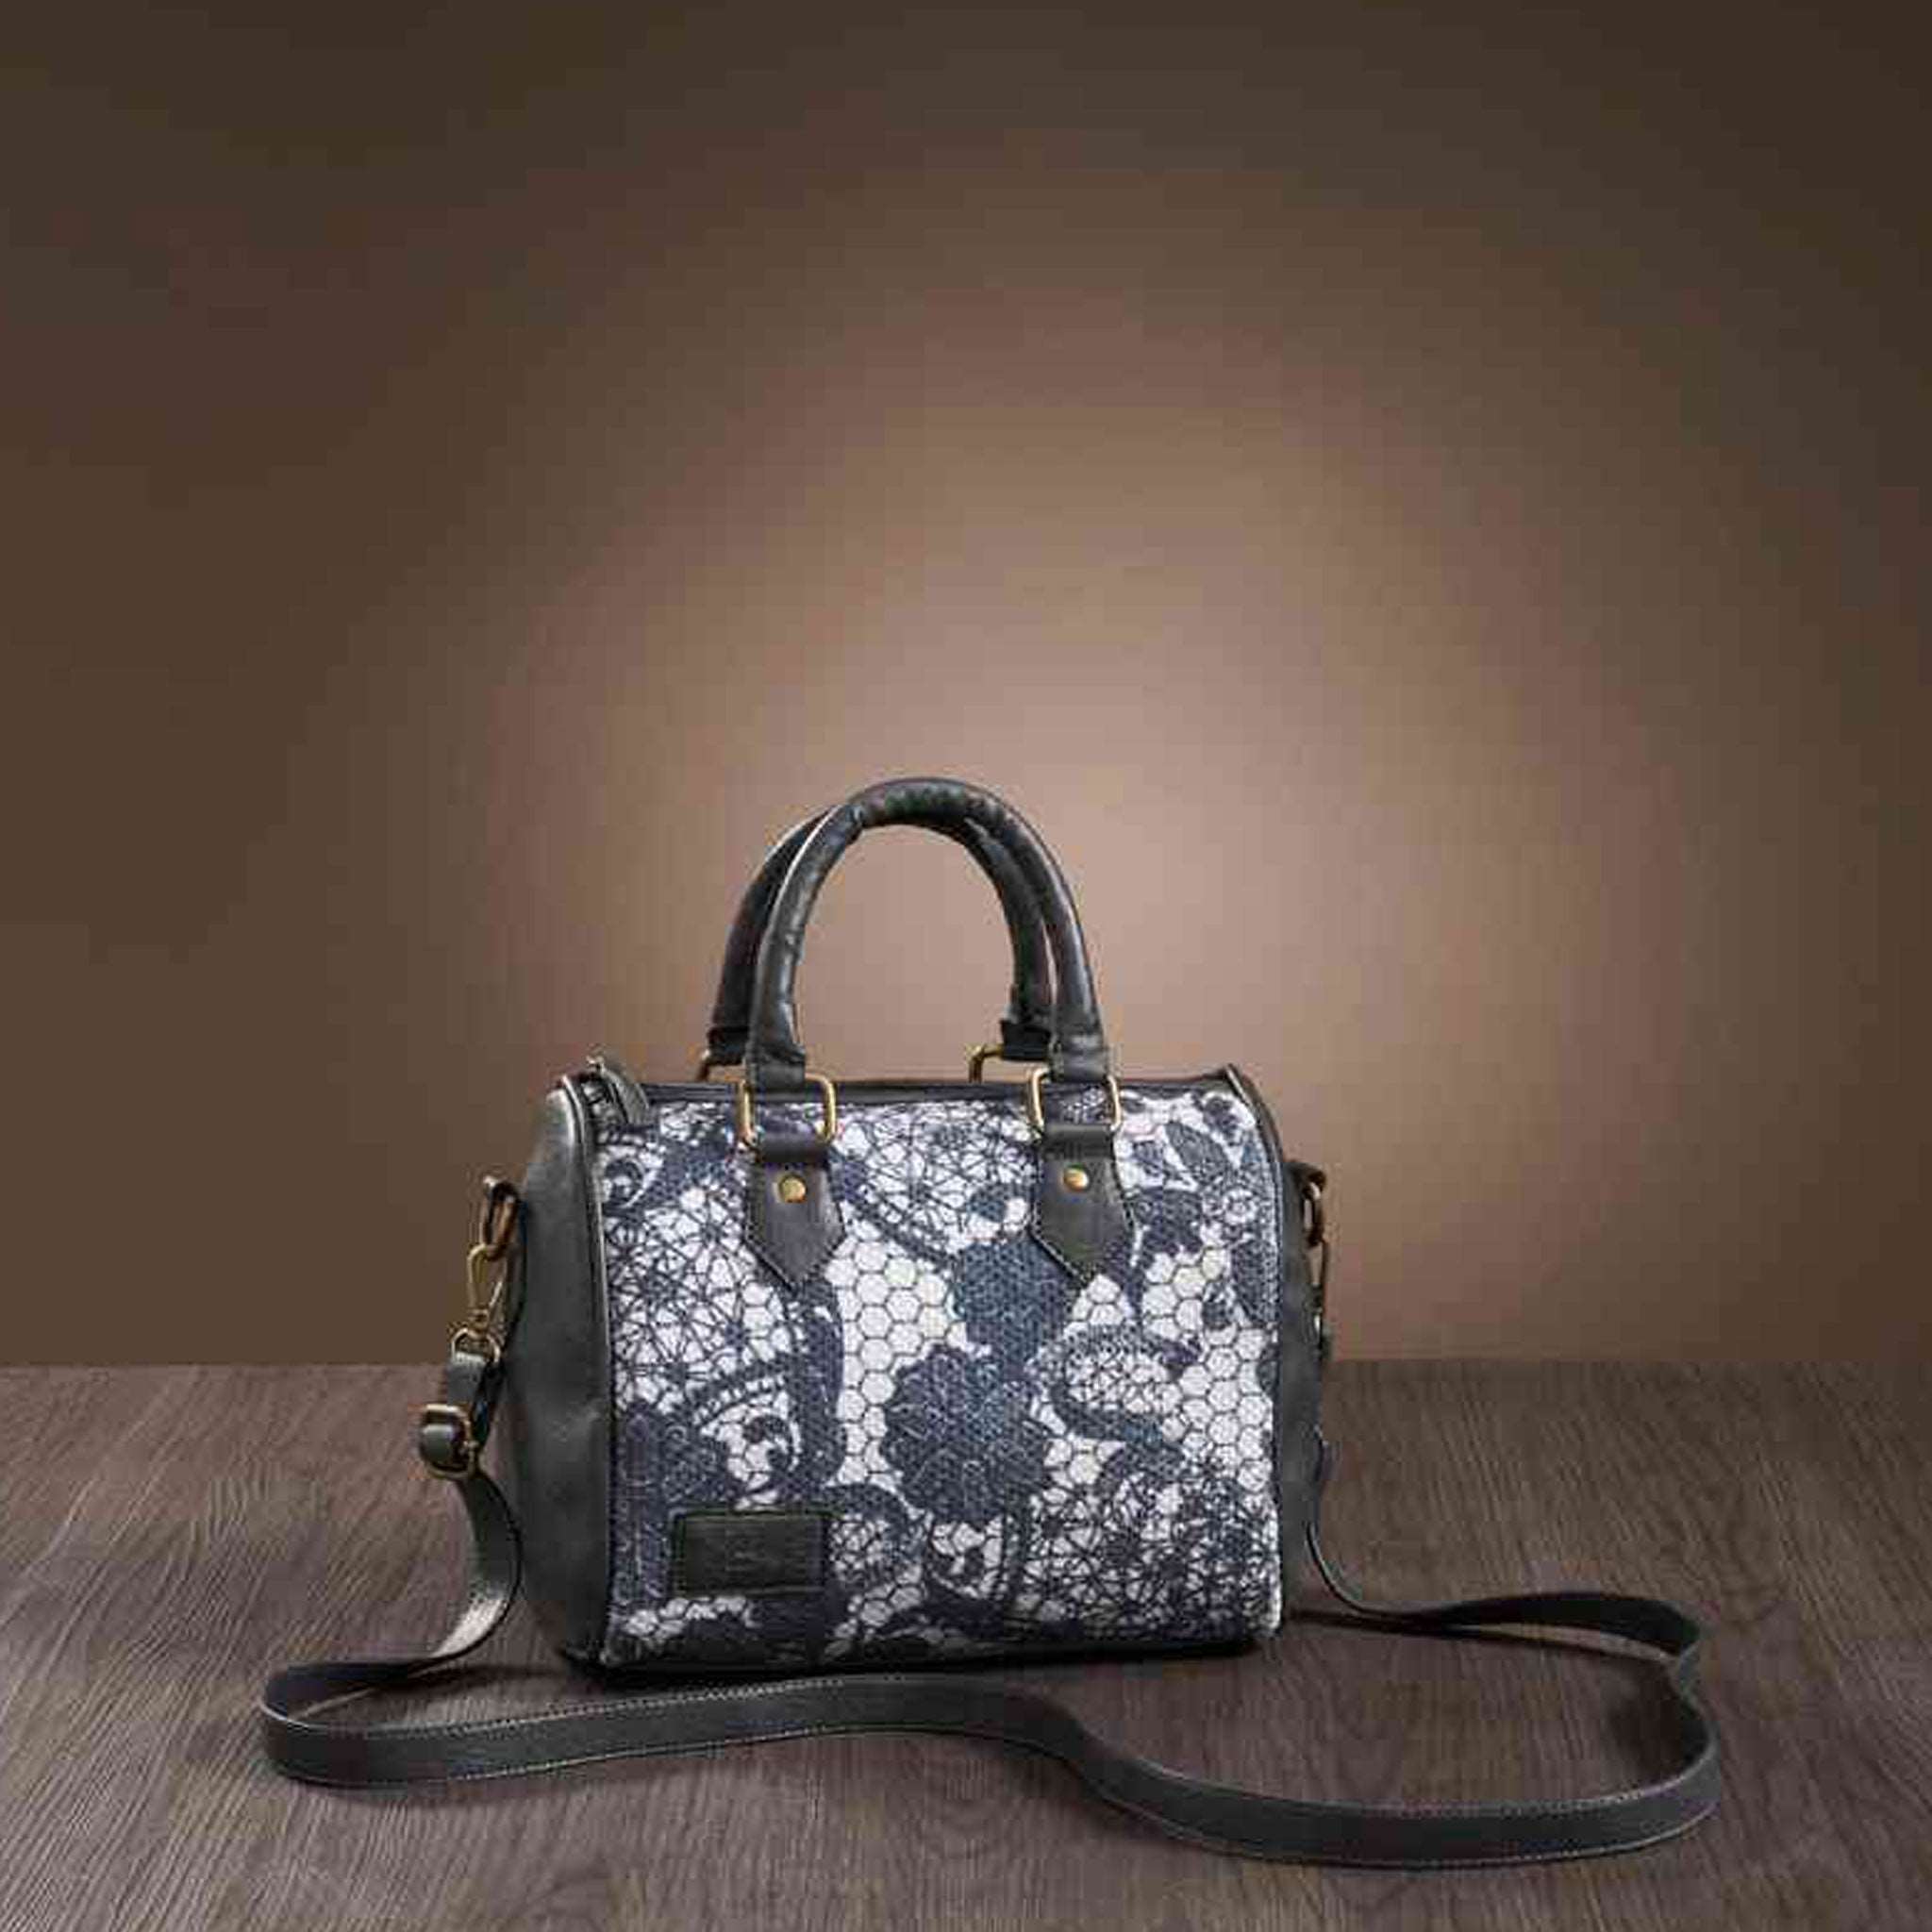 Mona B Canvas Small Vintage Handbag, Shoulder Bag, Crossbody Bag For Shopping, Travel With Stylish Design For Women (Grey, Kilim) - M-7003 - Handbag by Mona-B - Backpack, Flash Sale, Flat40, Sale, Shop2999, Shop3999